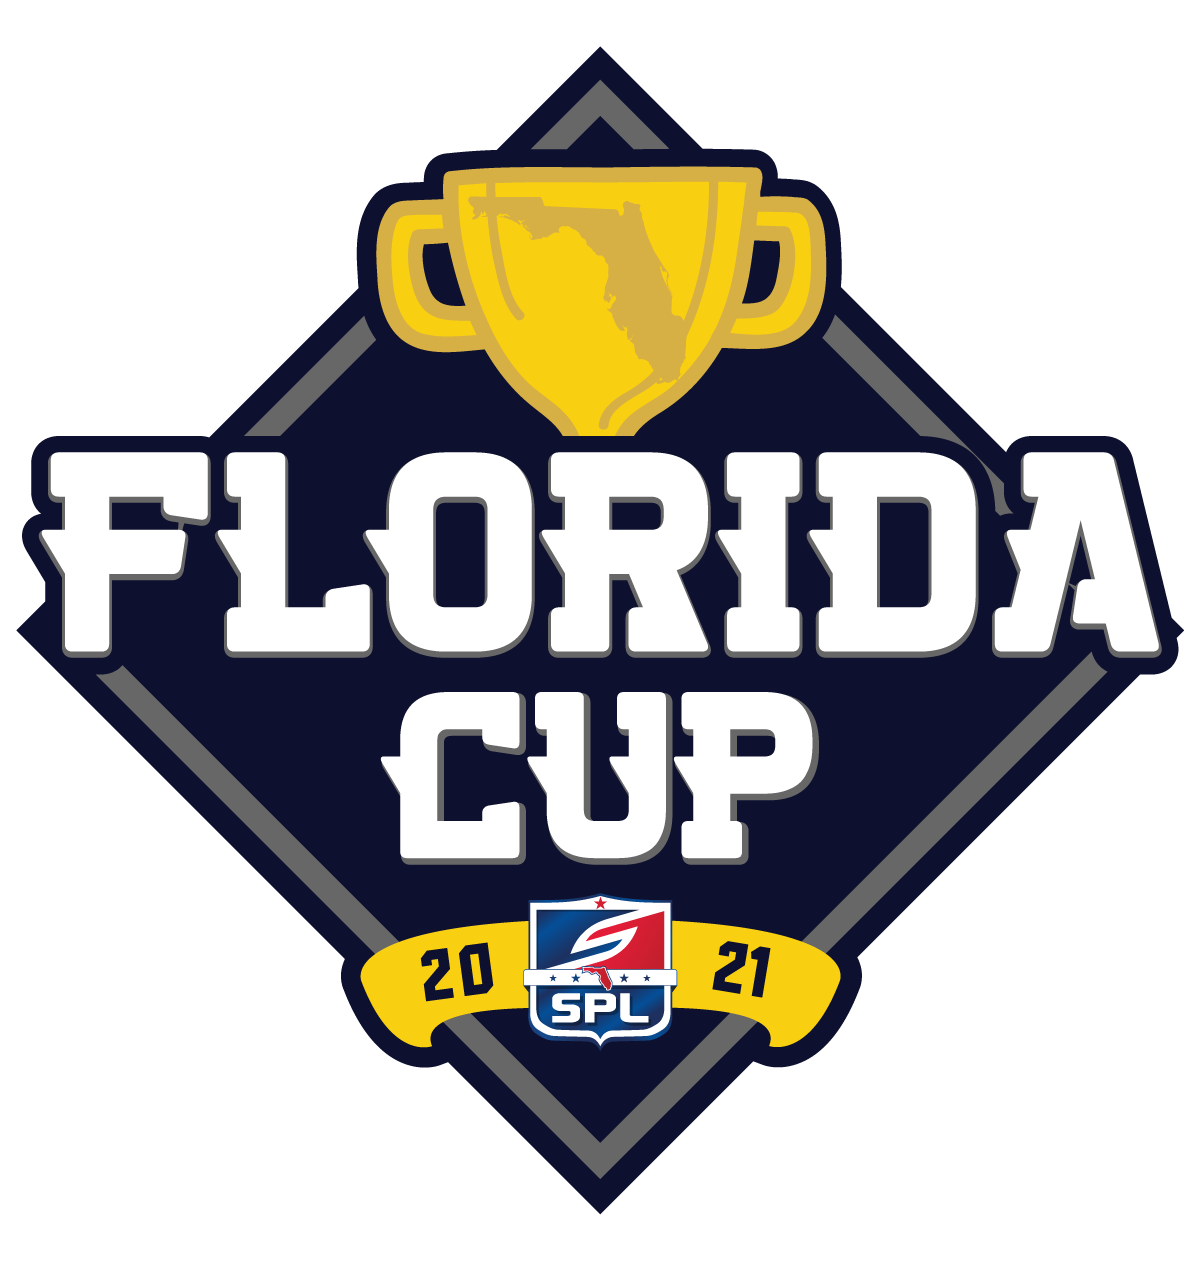 2021 Florida Cup SPL Florida & Paintball